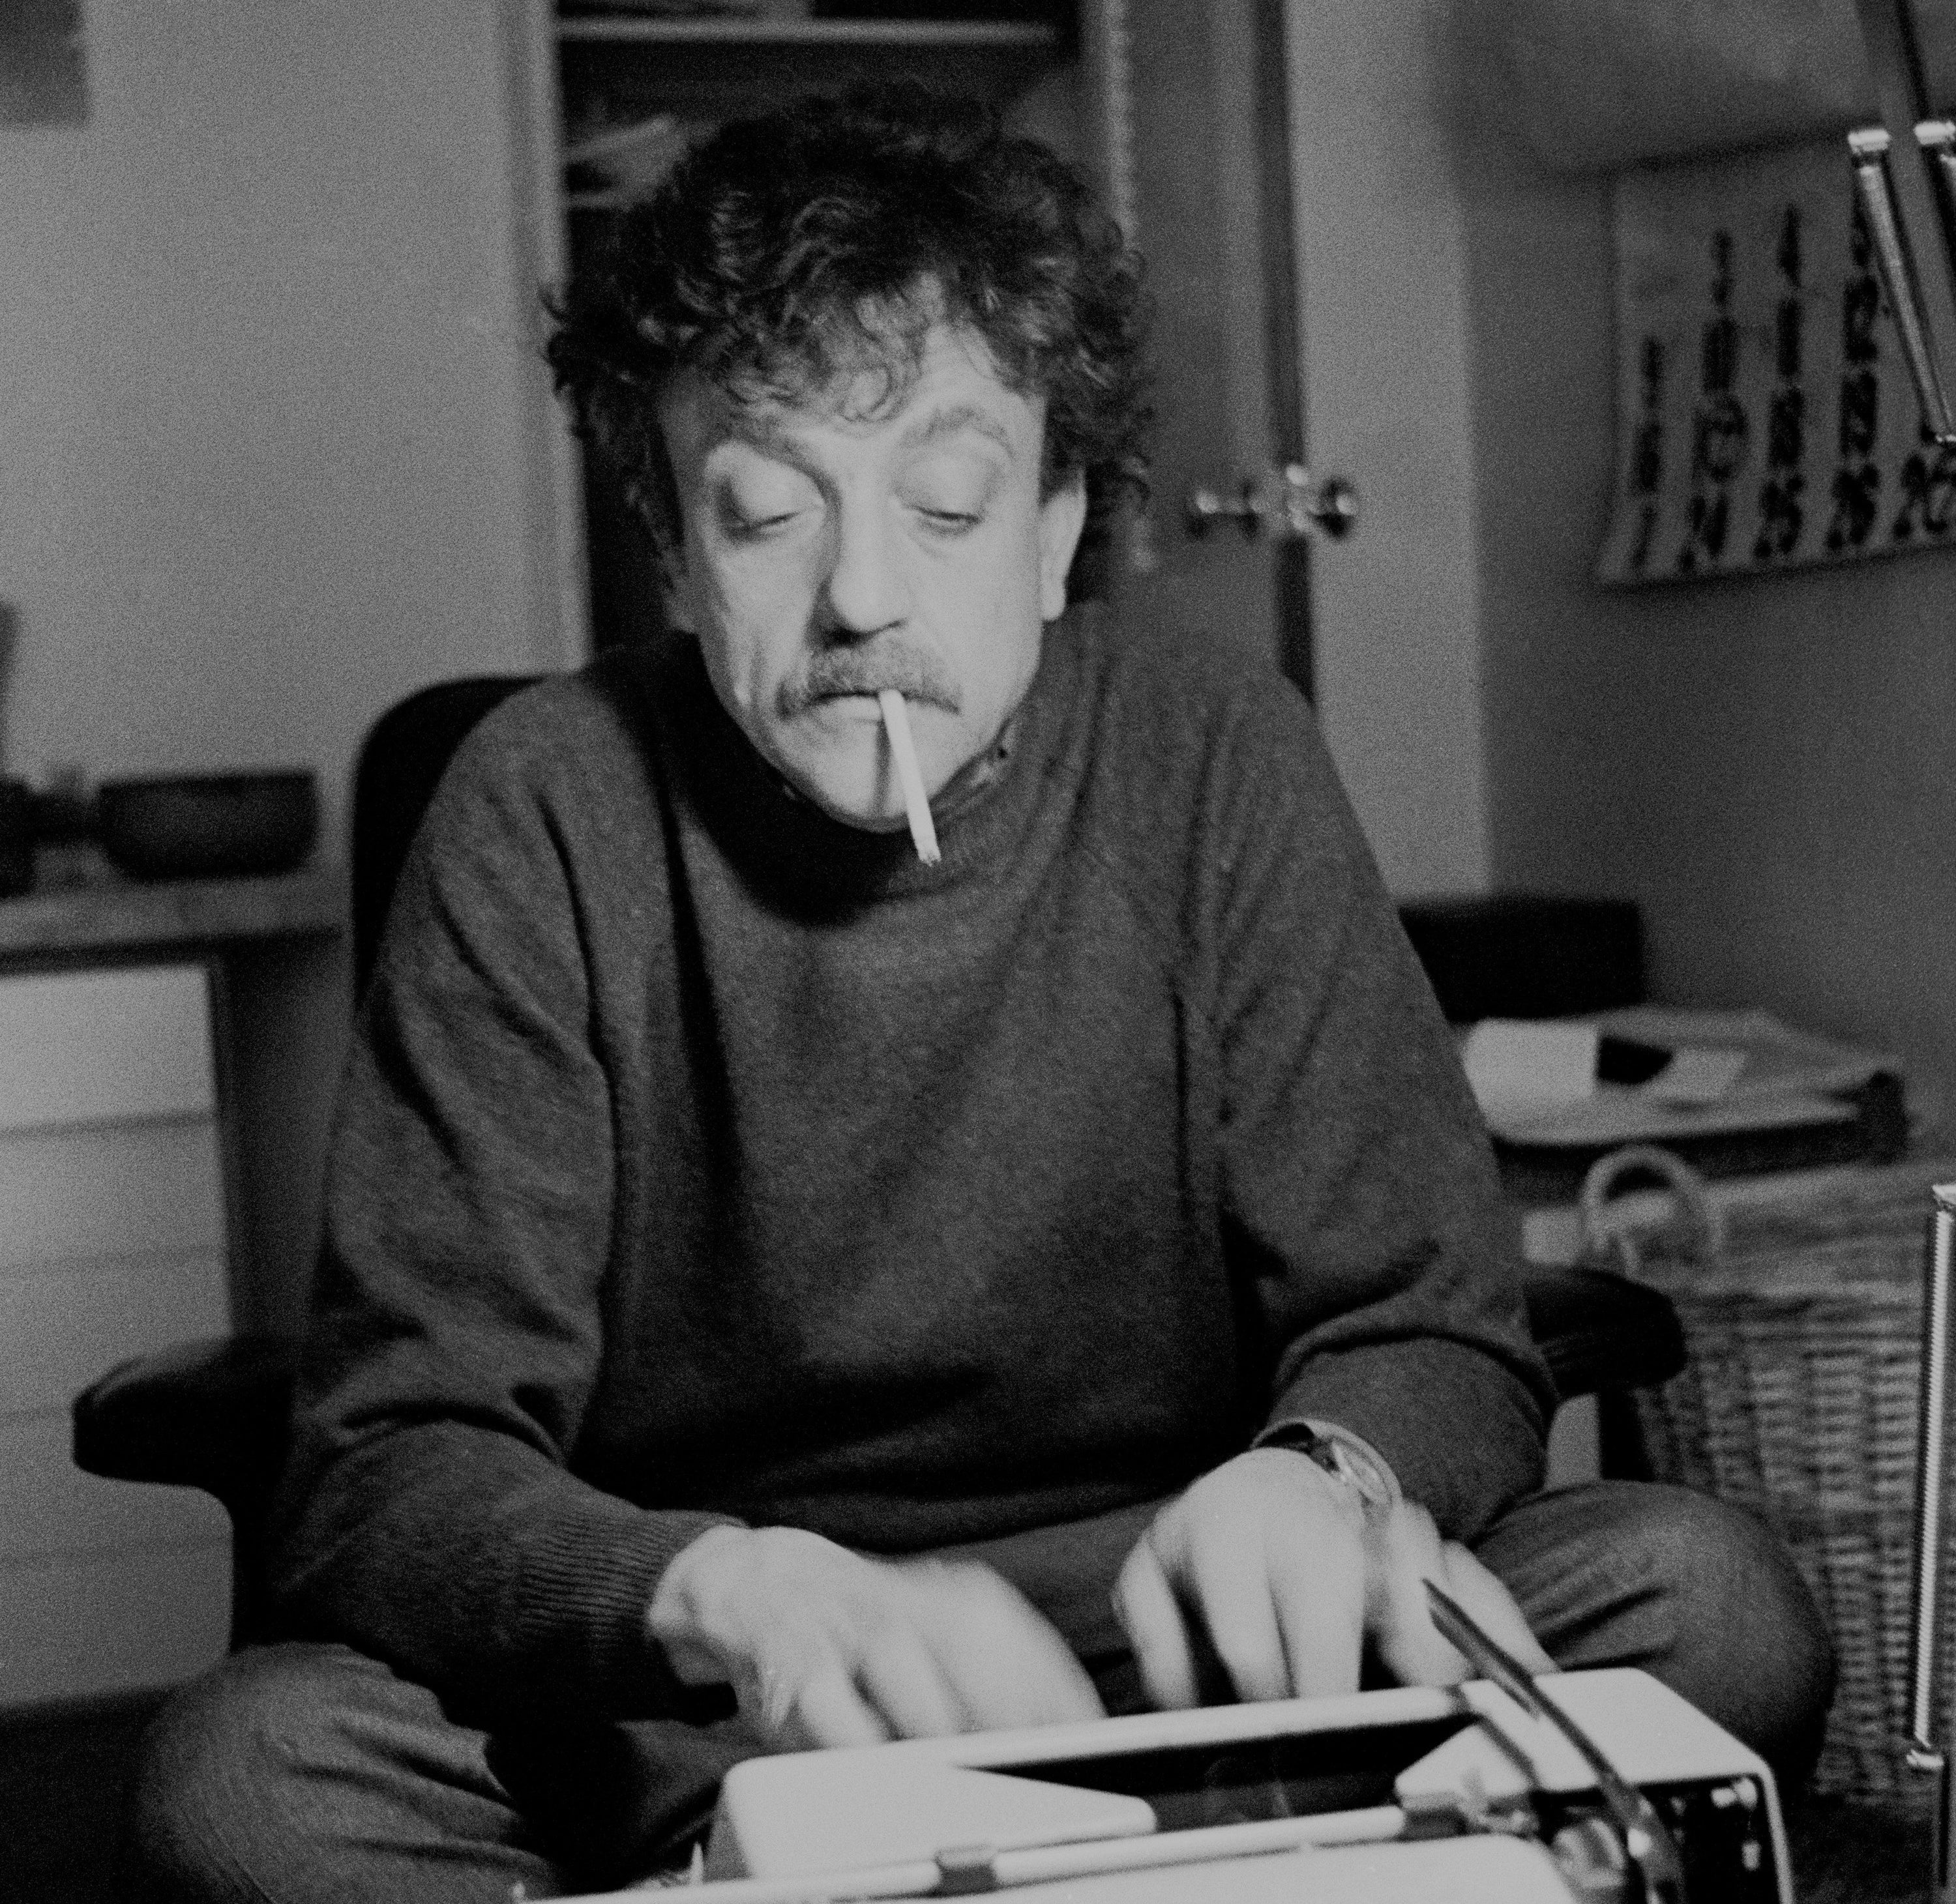 Kurt Vonnegut smoking and writing at a type writer